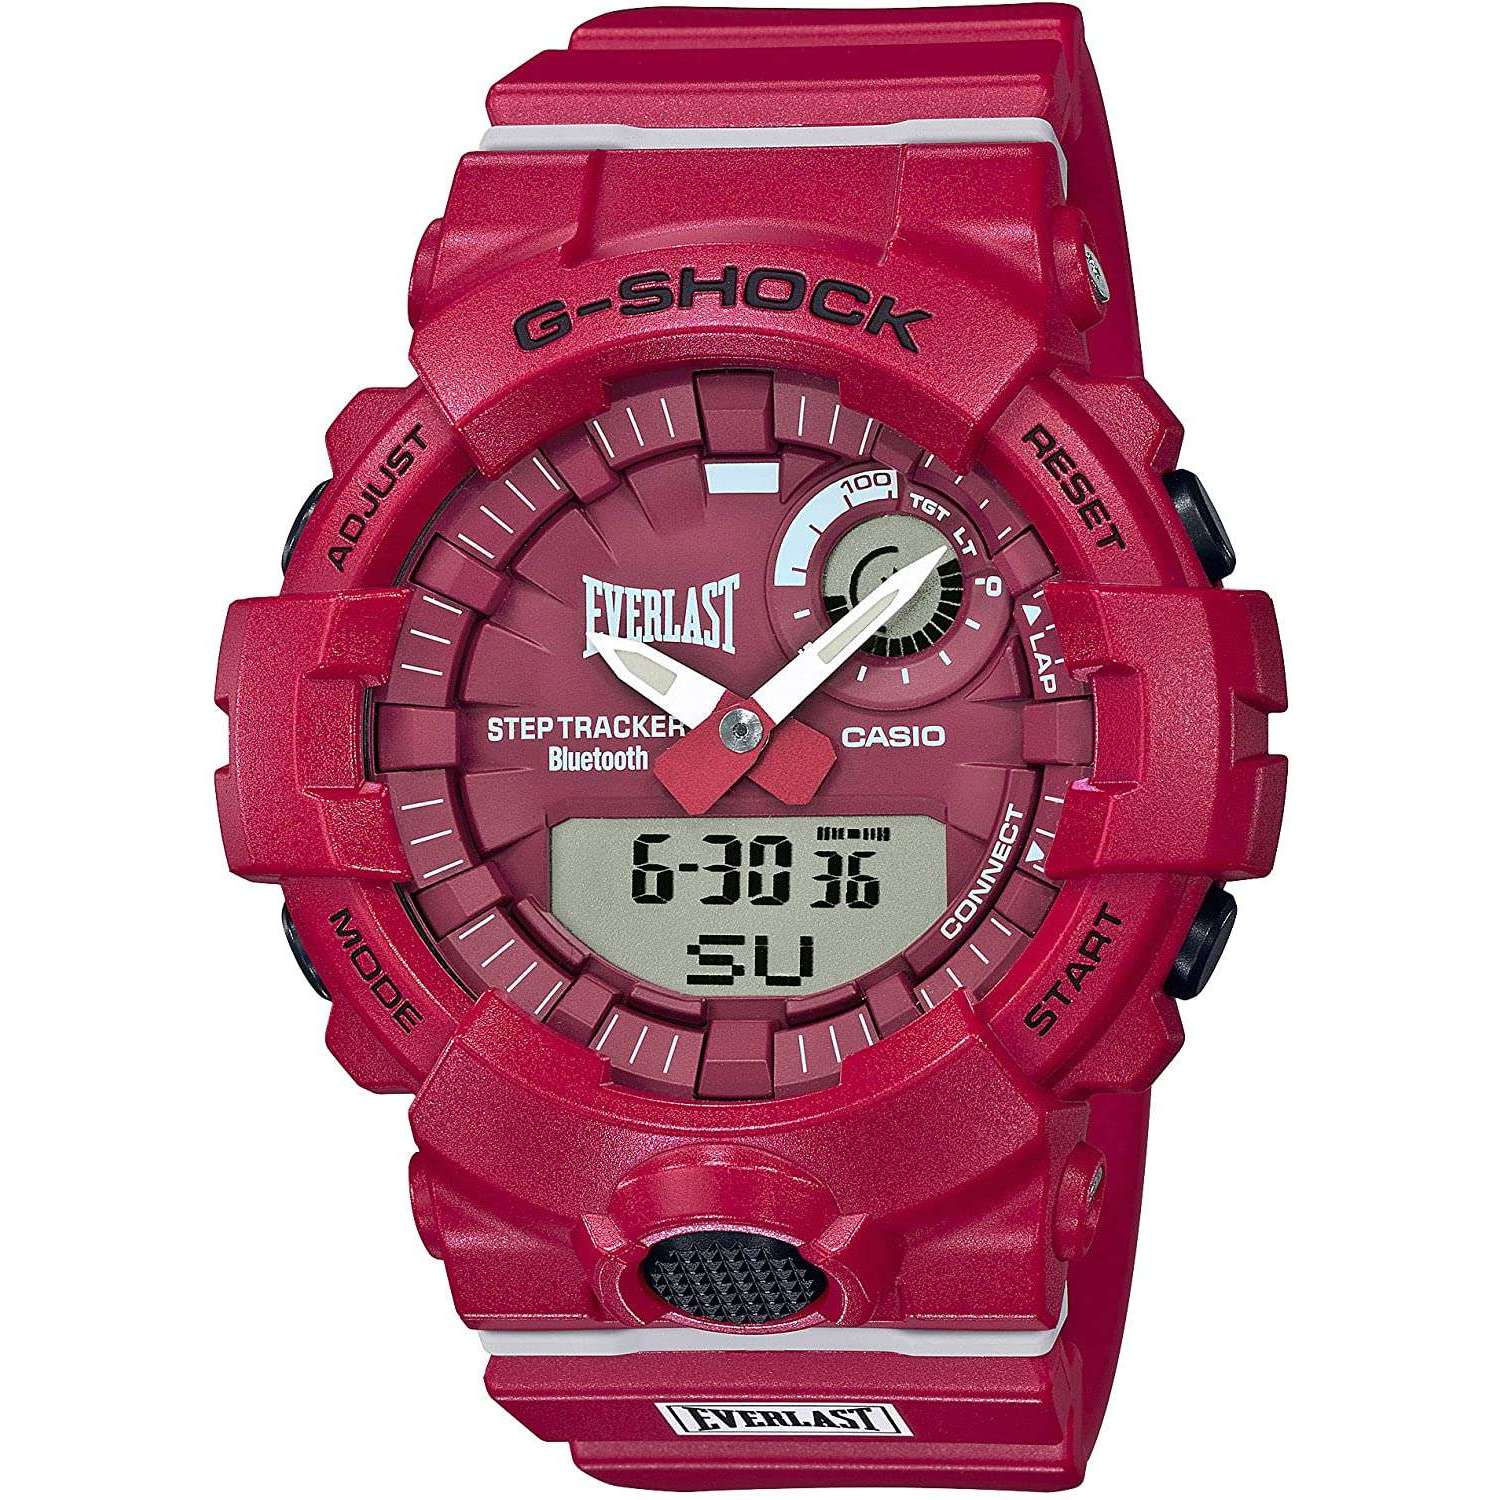 ROOK JAPAN:CASIO G-SHOCK EVERLAST JDM MEN WATCH GBA-800EL-4AJR,JDM Watch,Casio G-Shock